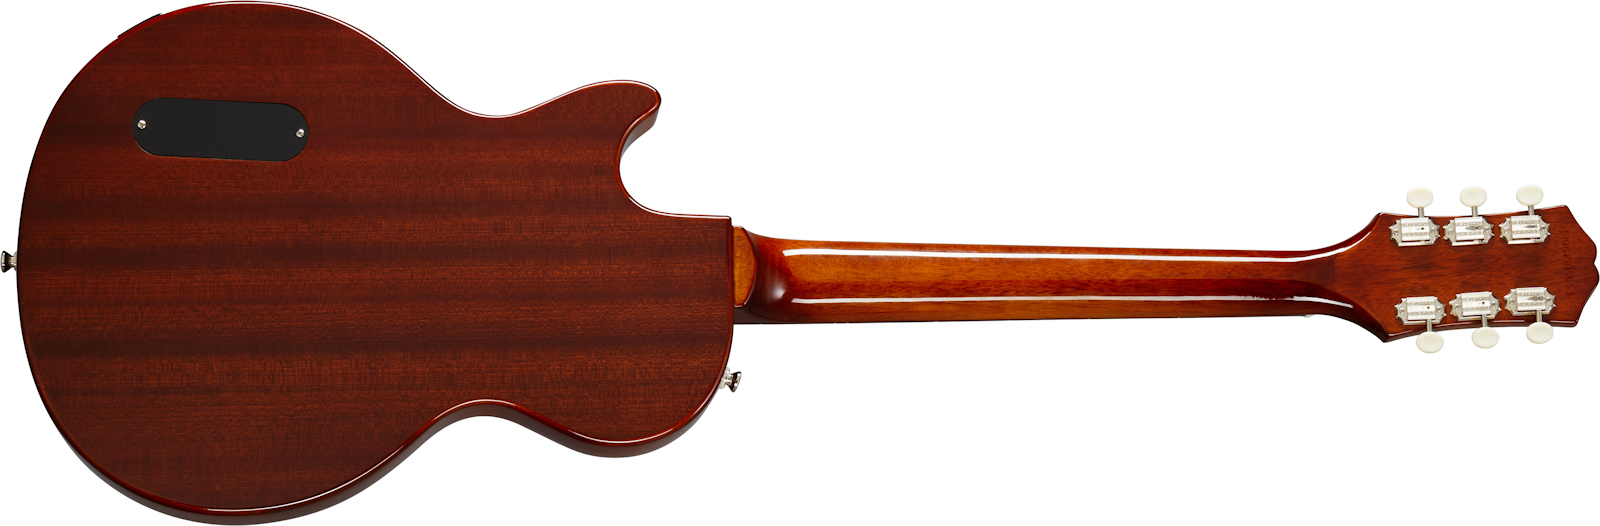 Epiphone Les Paul Junior Lh Gaucher 1s P90 Ht Rw - Vintage Sunburst - E-Gitarre für Linkshänder - Variation 1